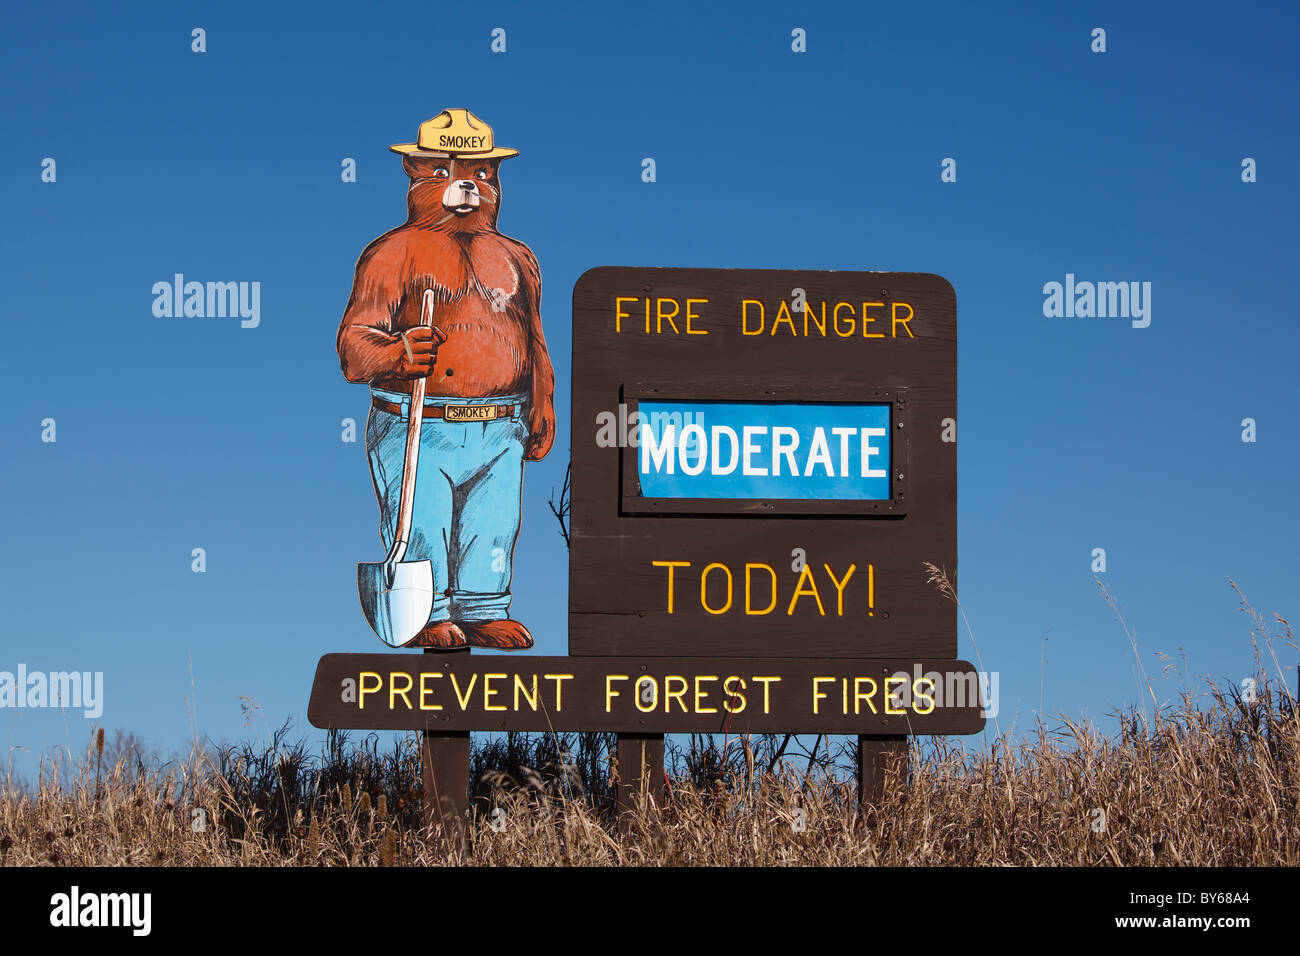 A Smokey the Bear fire danger sign showing 'moderate' risk - northern Minnesota, USA. Stock Photo